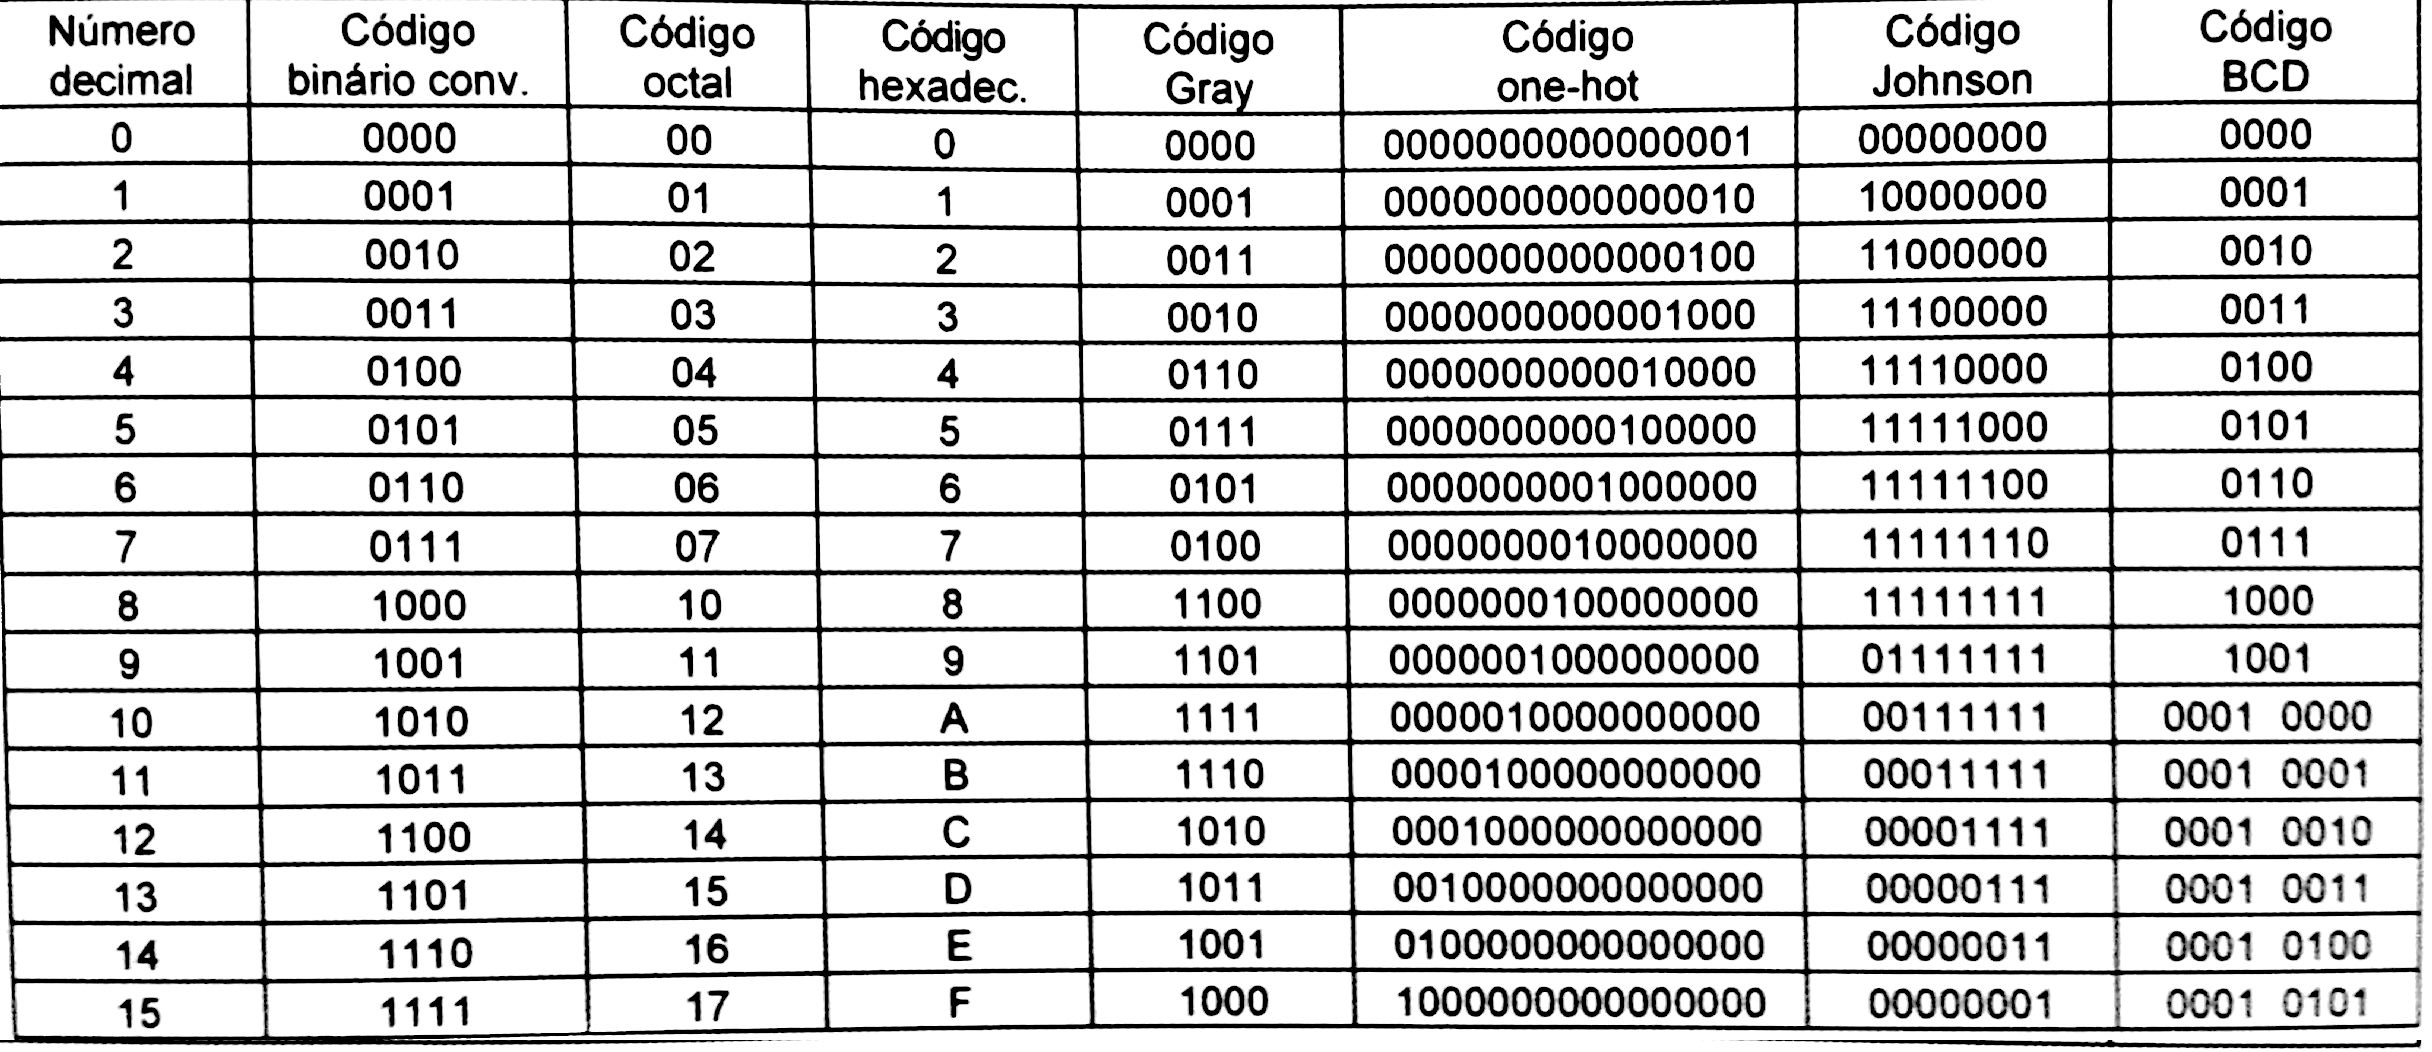 Tabela de equivalência entre códigos